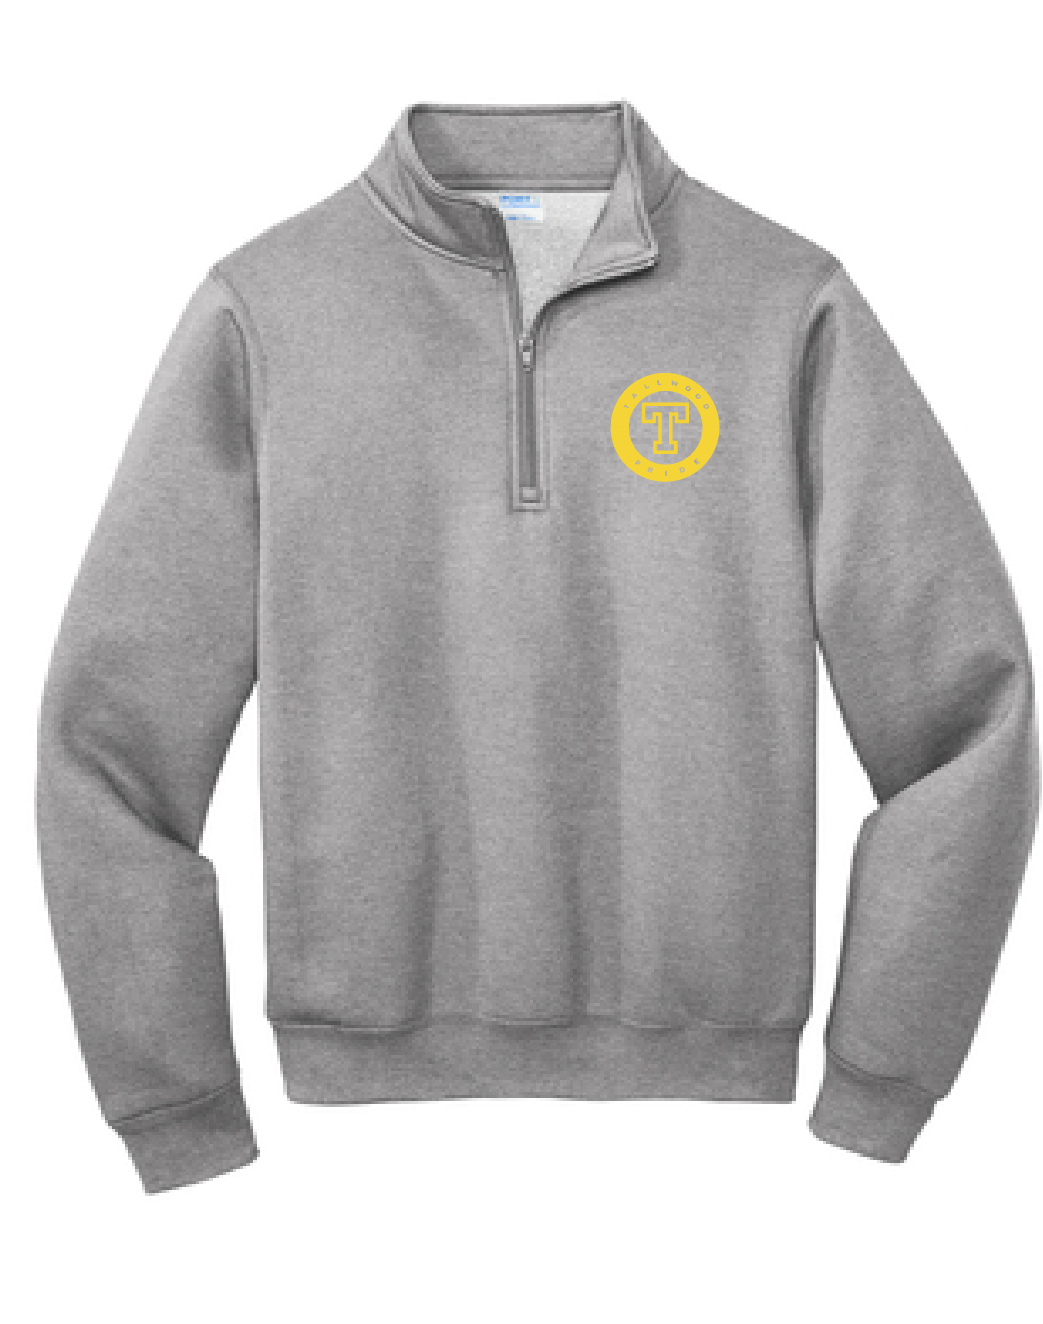 Fleece 1/4-Zip Pullover Sweatshirt  / Athletic Heather  / Tallwood High School